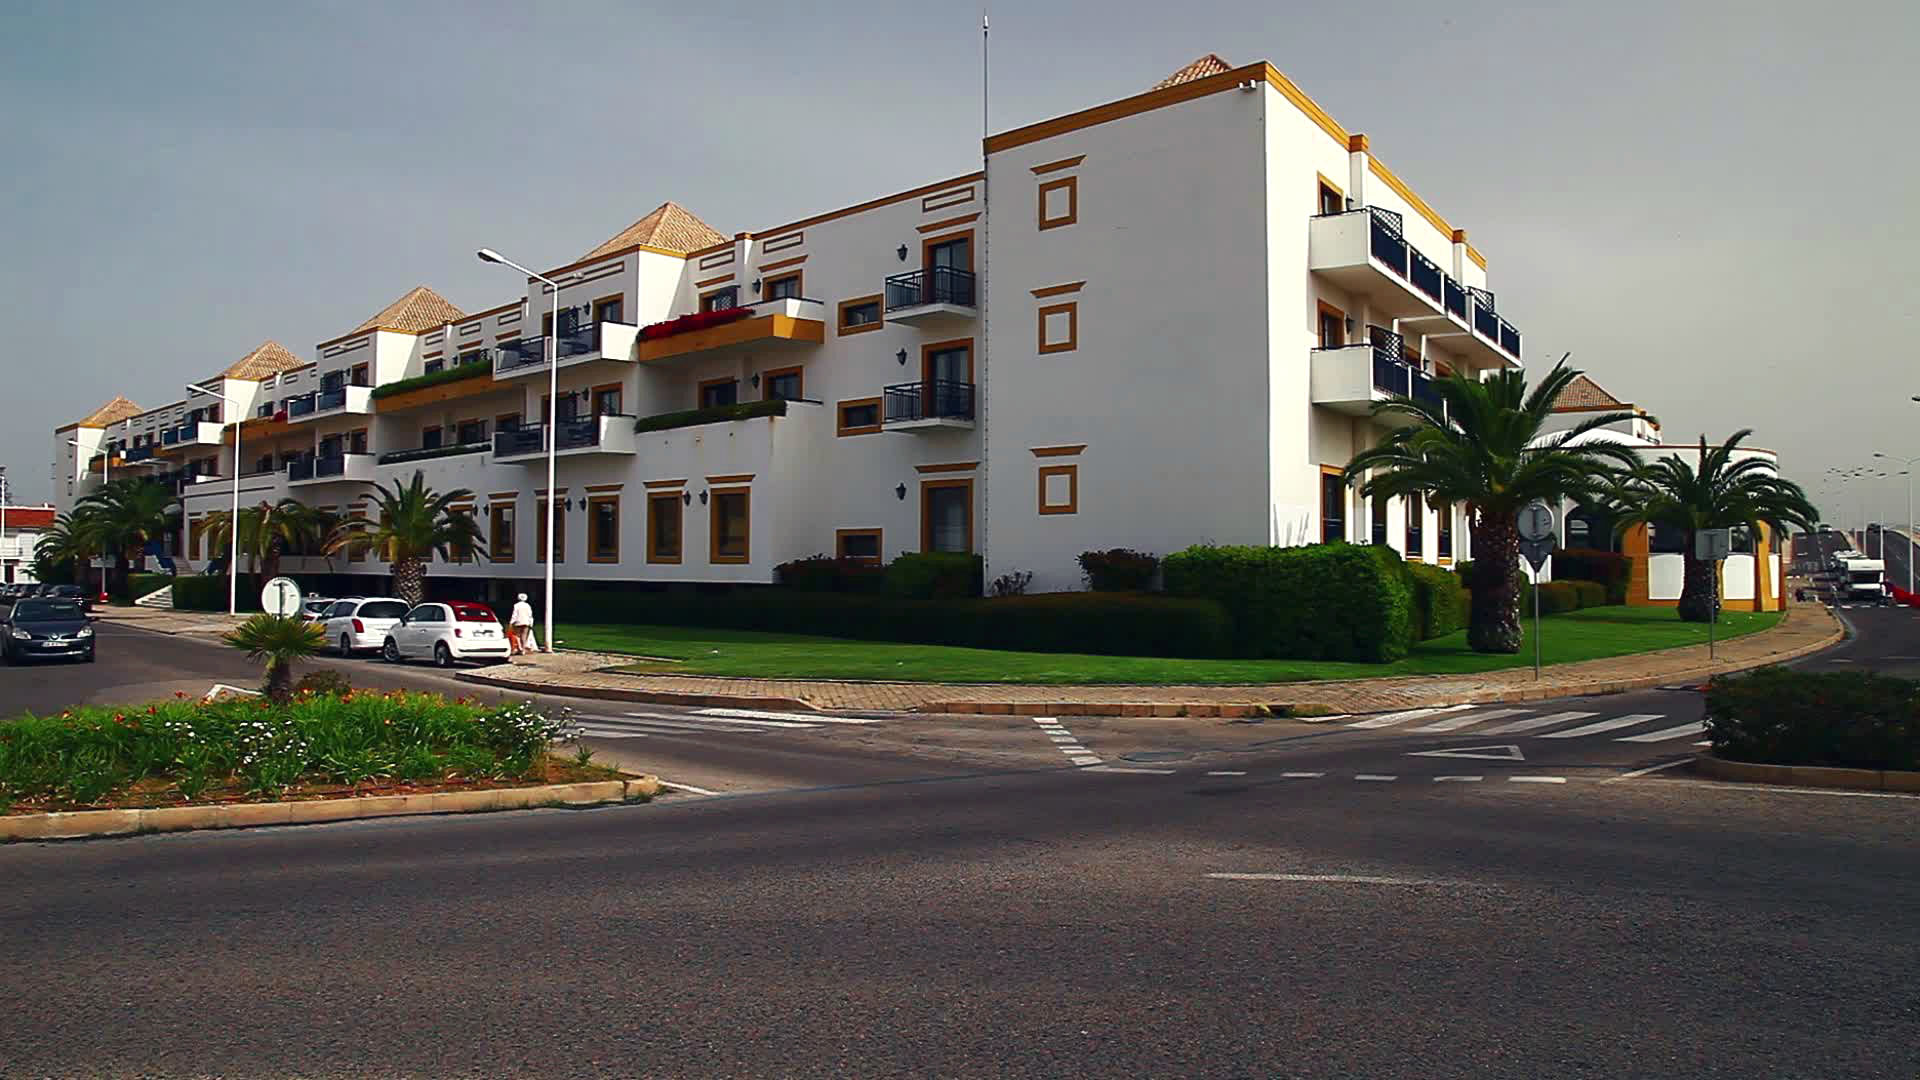 Vila Galé Tavira